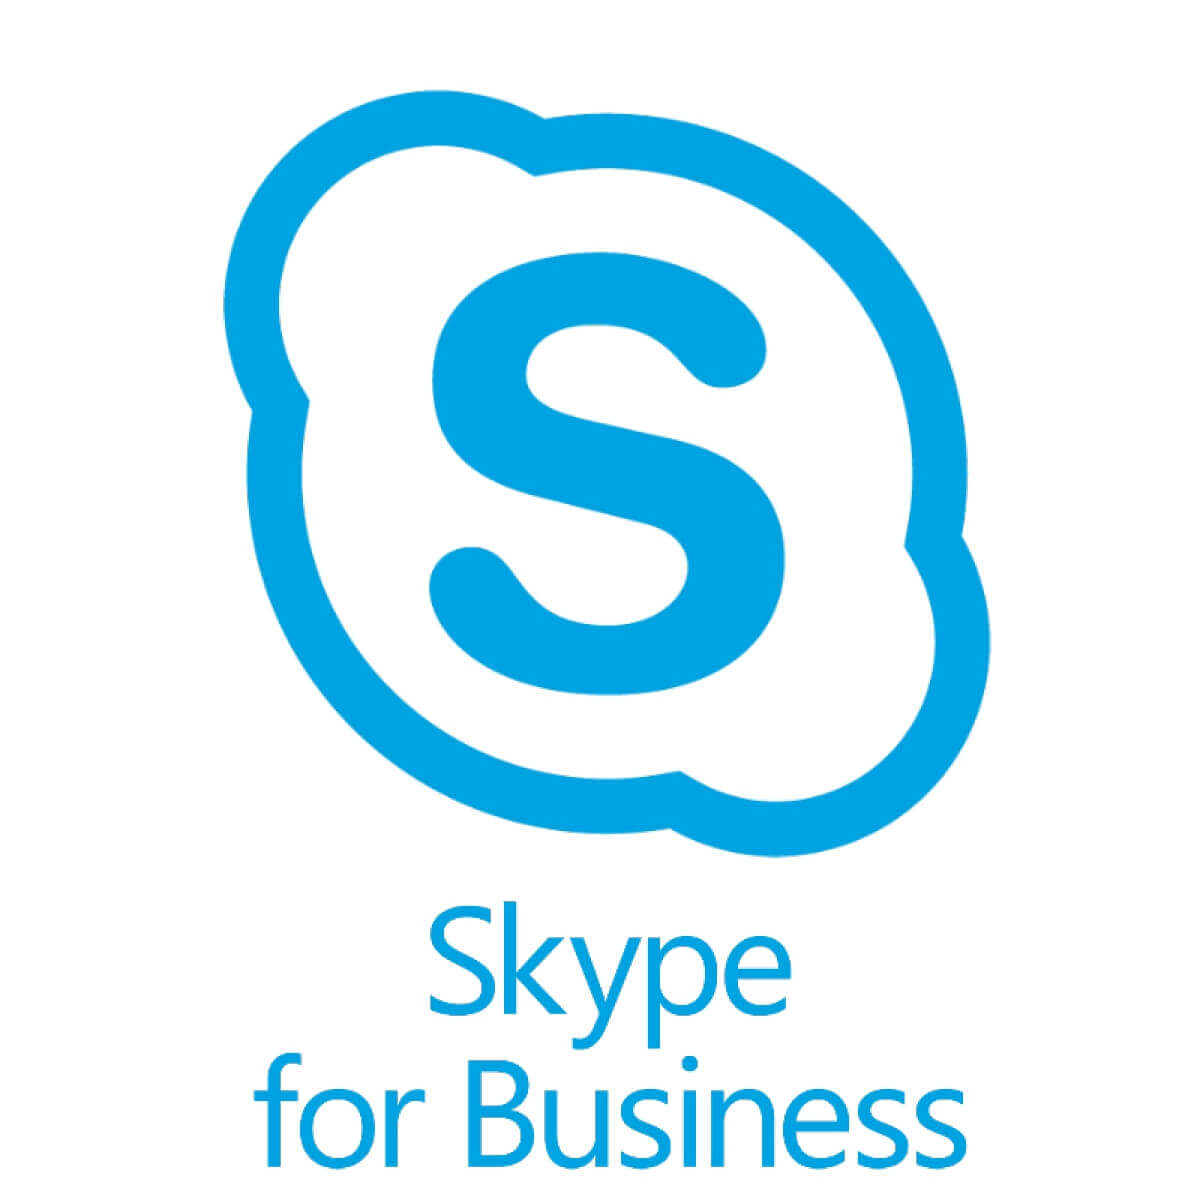 skype for business mac won